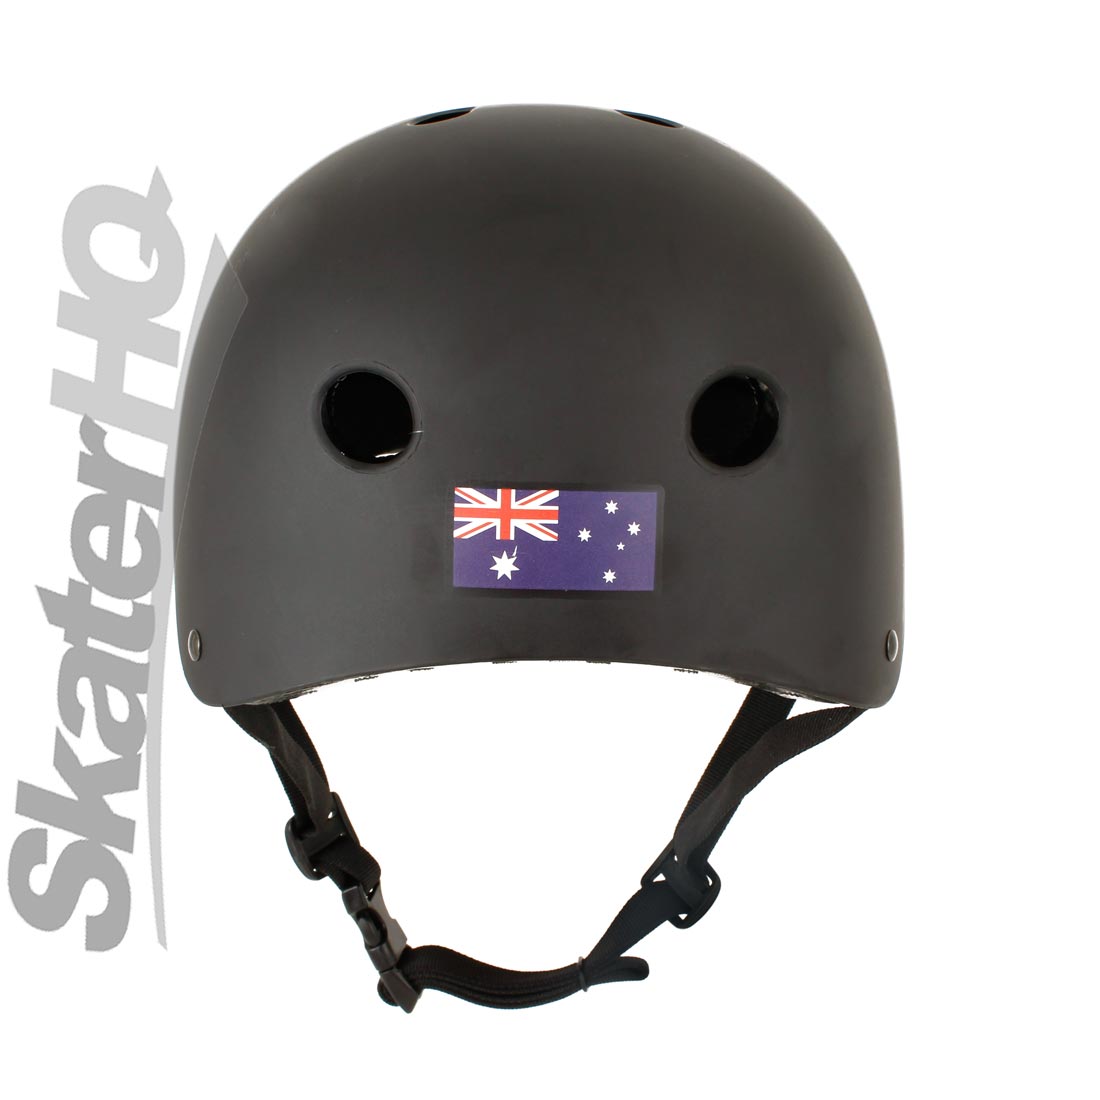 Banzai Bike Helmet Matte Black - S/M Helmets